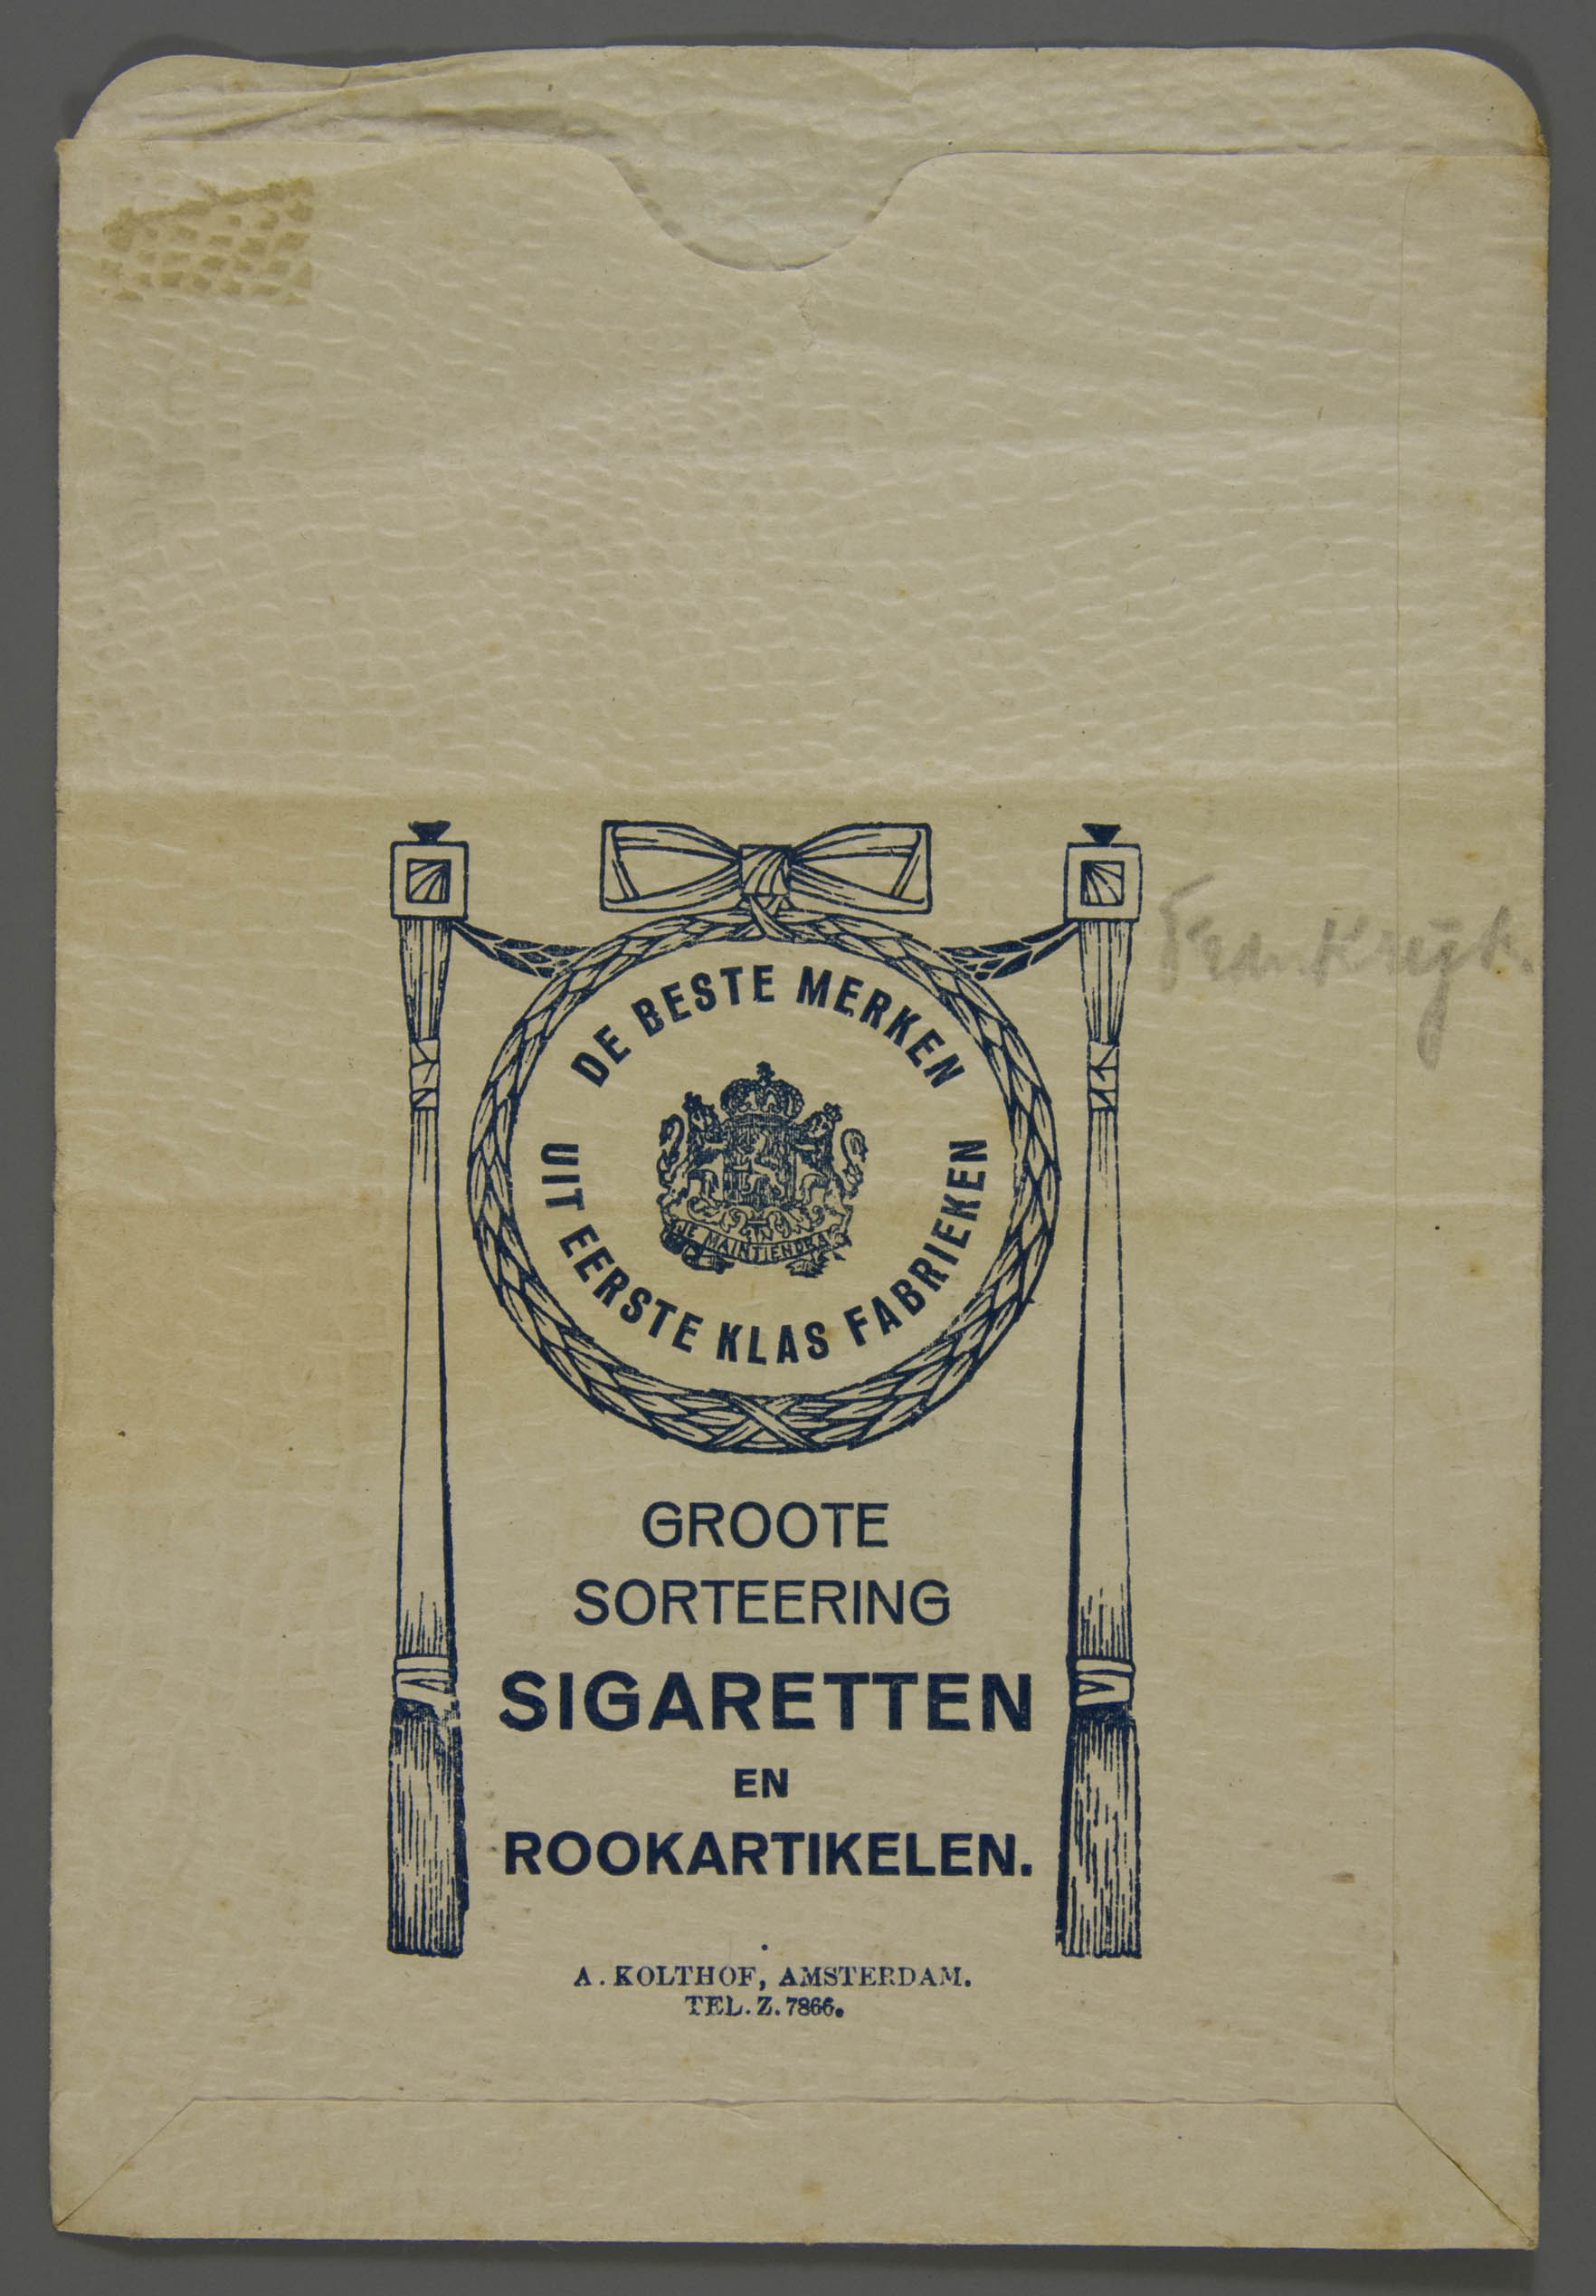 76-26.124-amsterdam-cigar-bag-neger-amsterdam-2